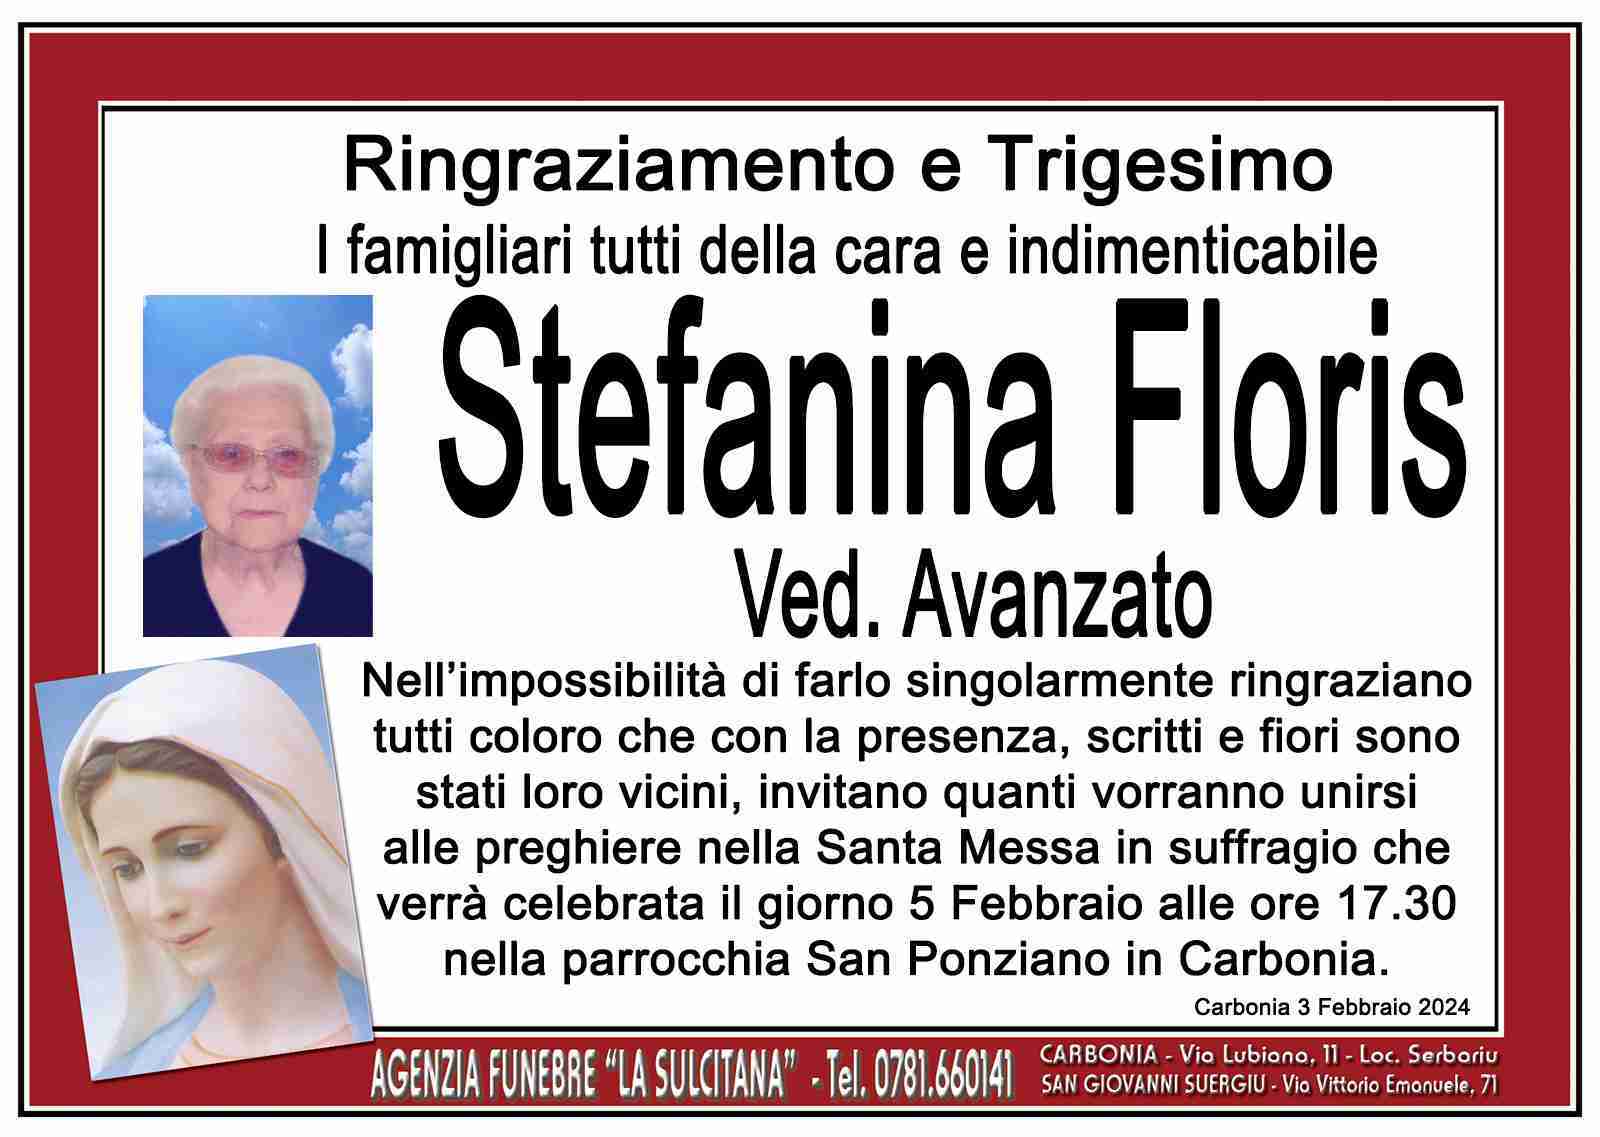 Stefanina Floris